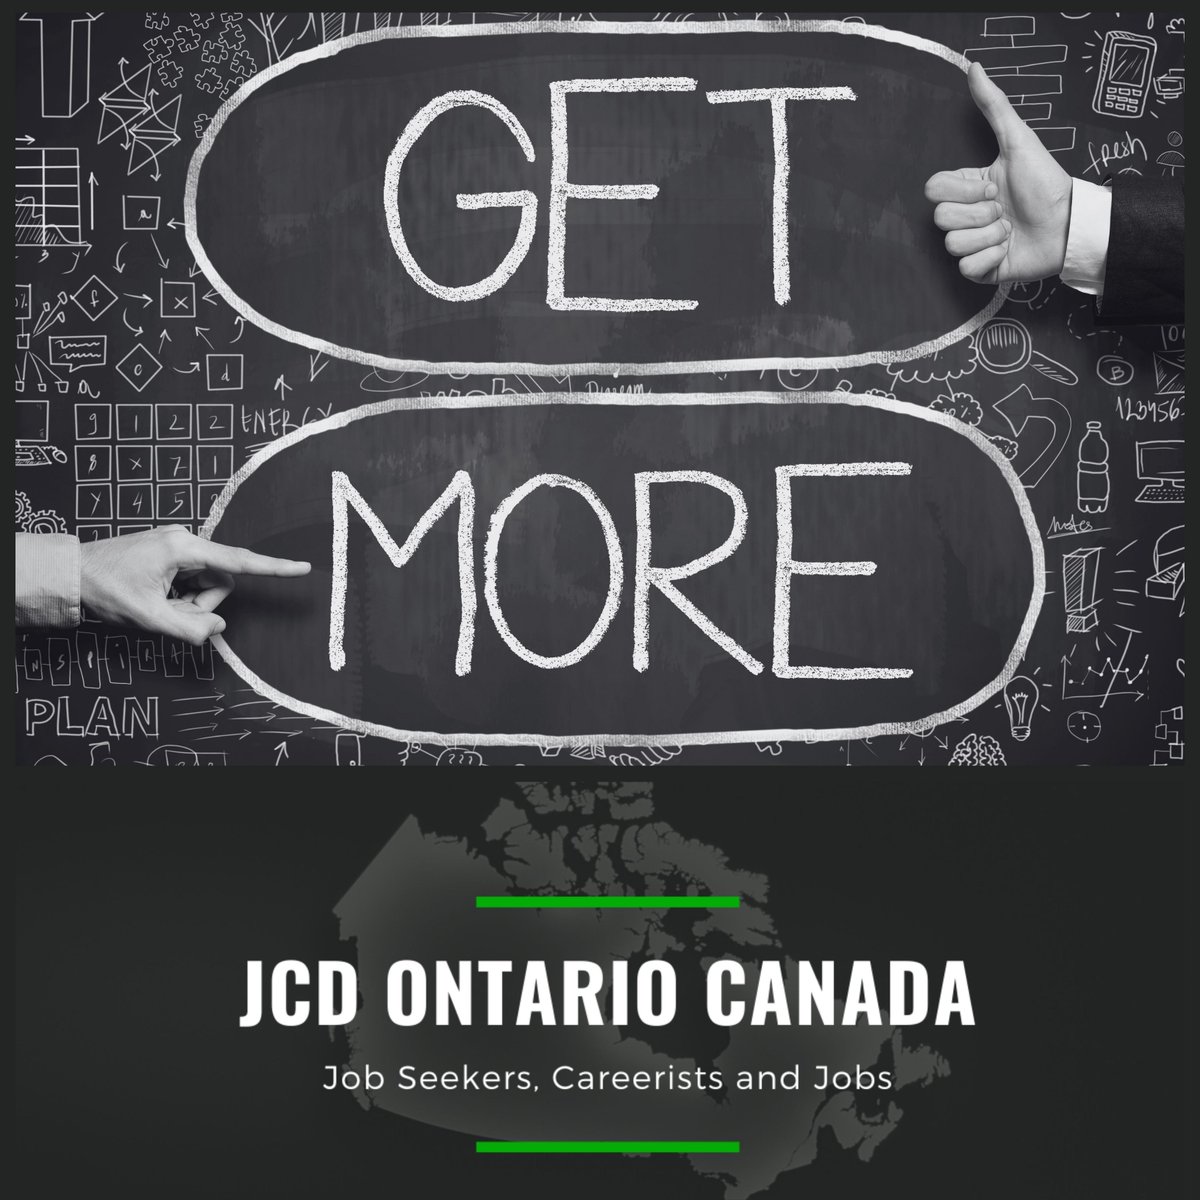 Looking for #jobs or #hiring #Talent in #Ontario? GO HERE buff.ly/3pTul8W

#Toronto #Mississauga #Torontojobs #GTAjobs #Ottawajobs #Hamiltonjobs #Kitchenerjobs #Barriejobs #Guelphjobs #Niagarajobs #Mississaugjobs #Pickeringjobs #Sudburyjobs #Oakvillejobs #NorthBayjobs